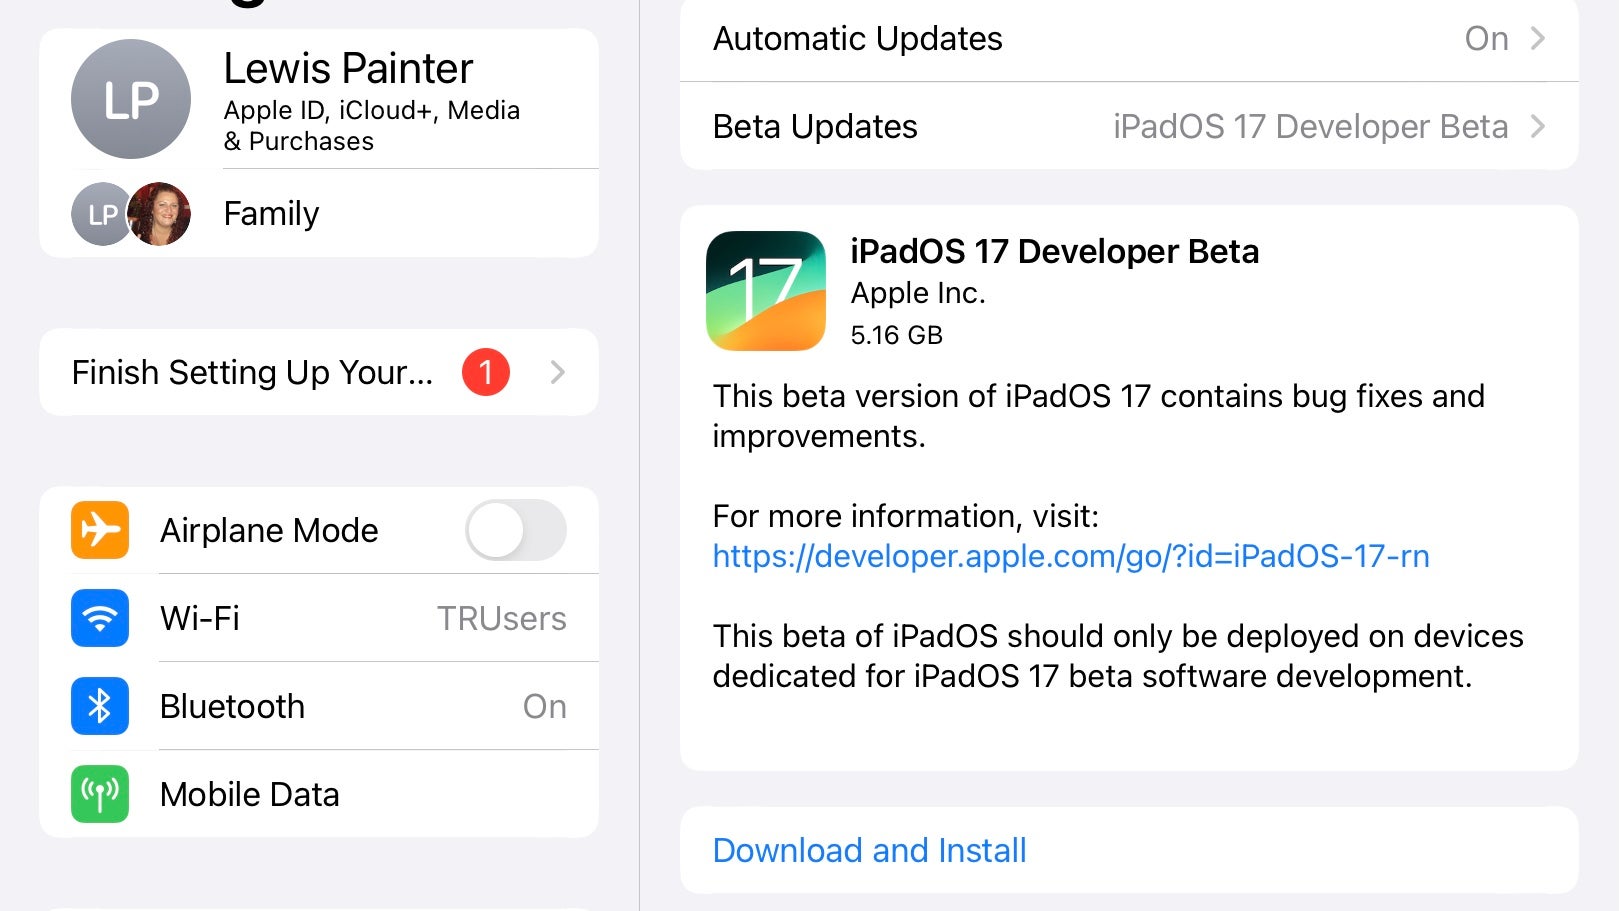 iPadOS 17 Developer Beta update menu